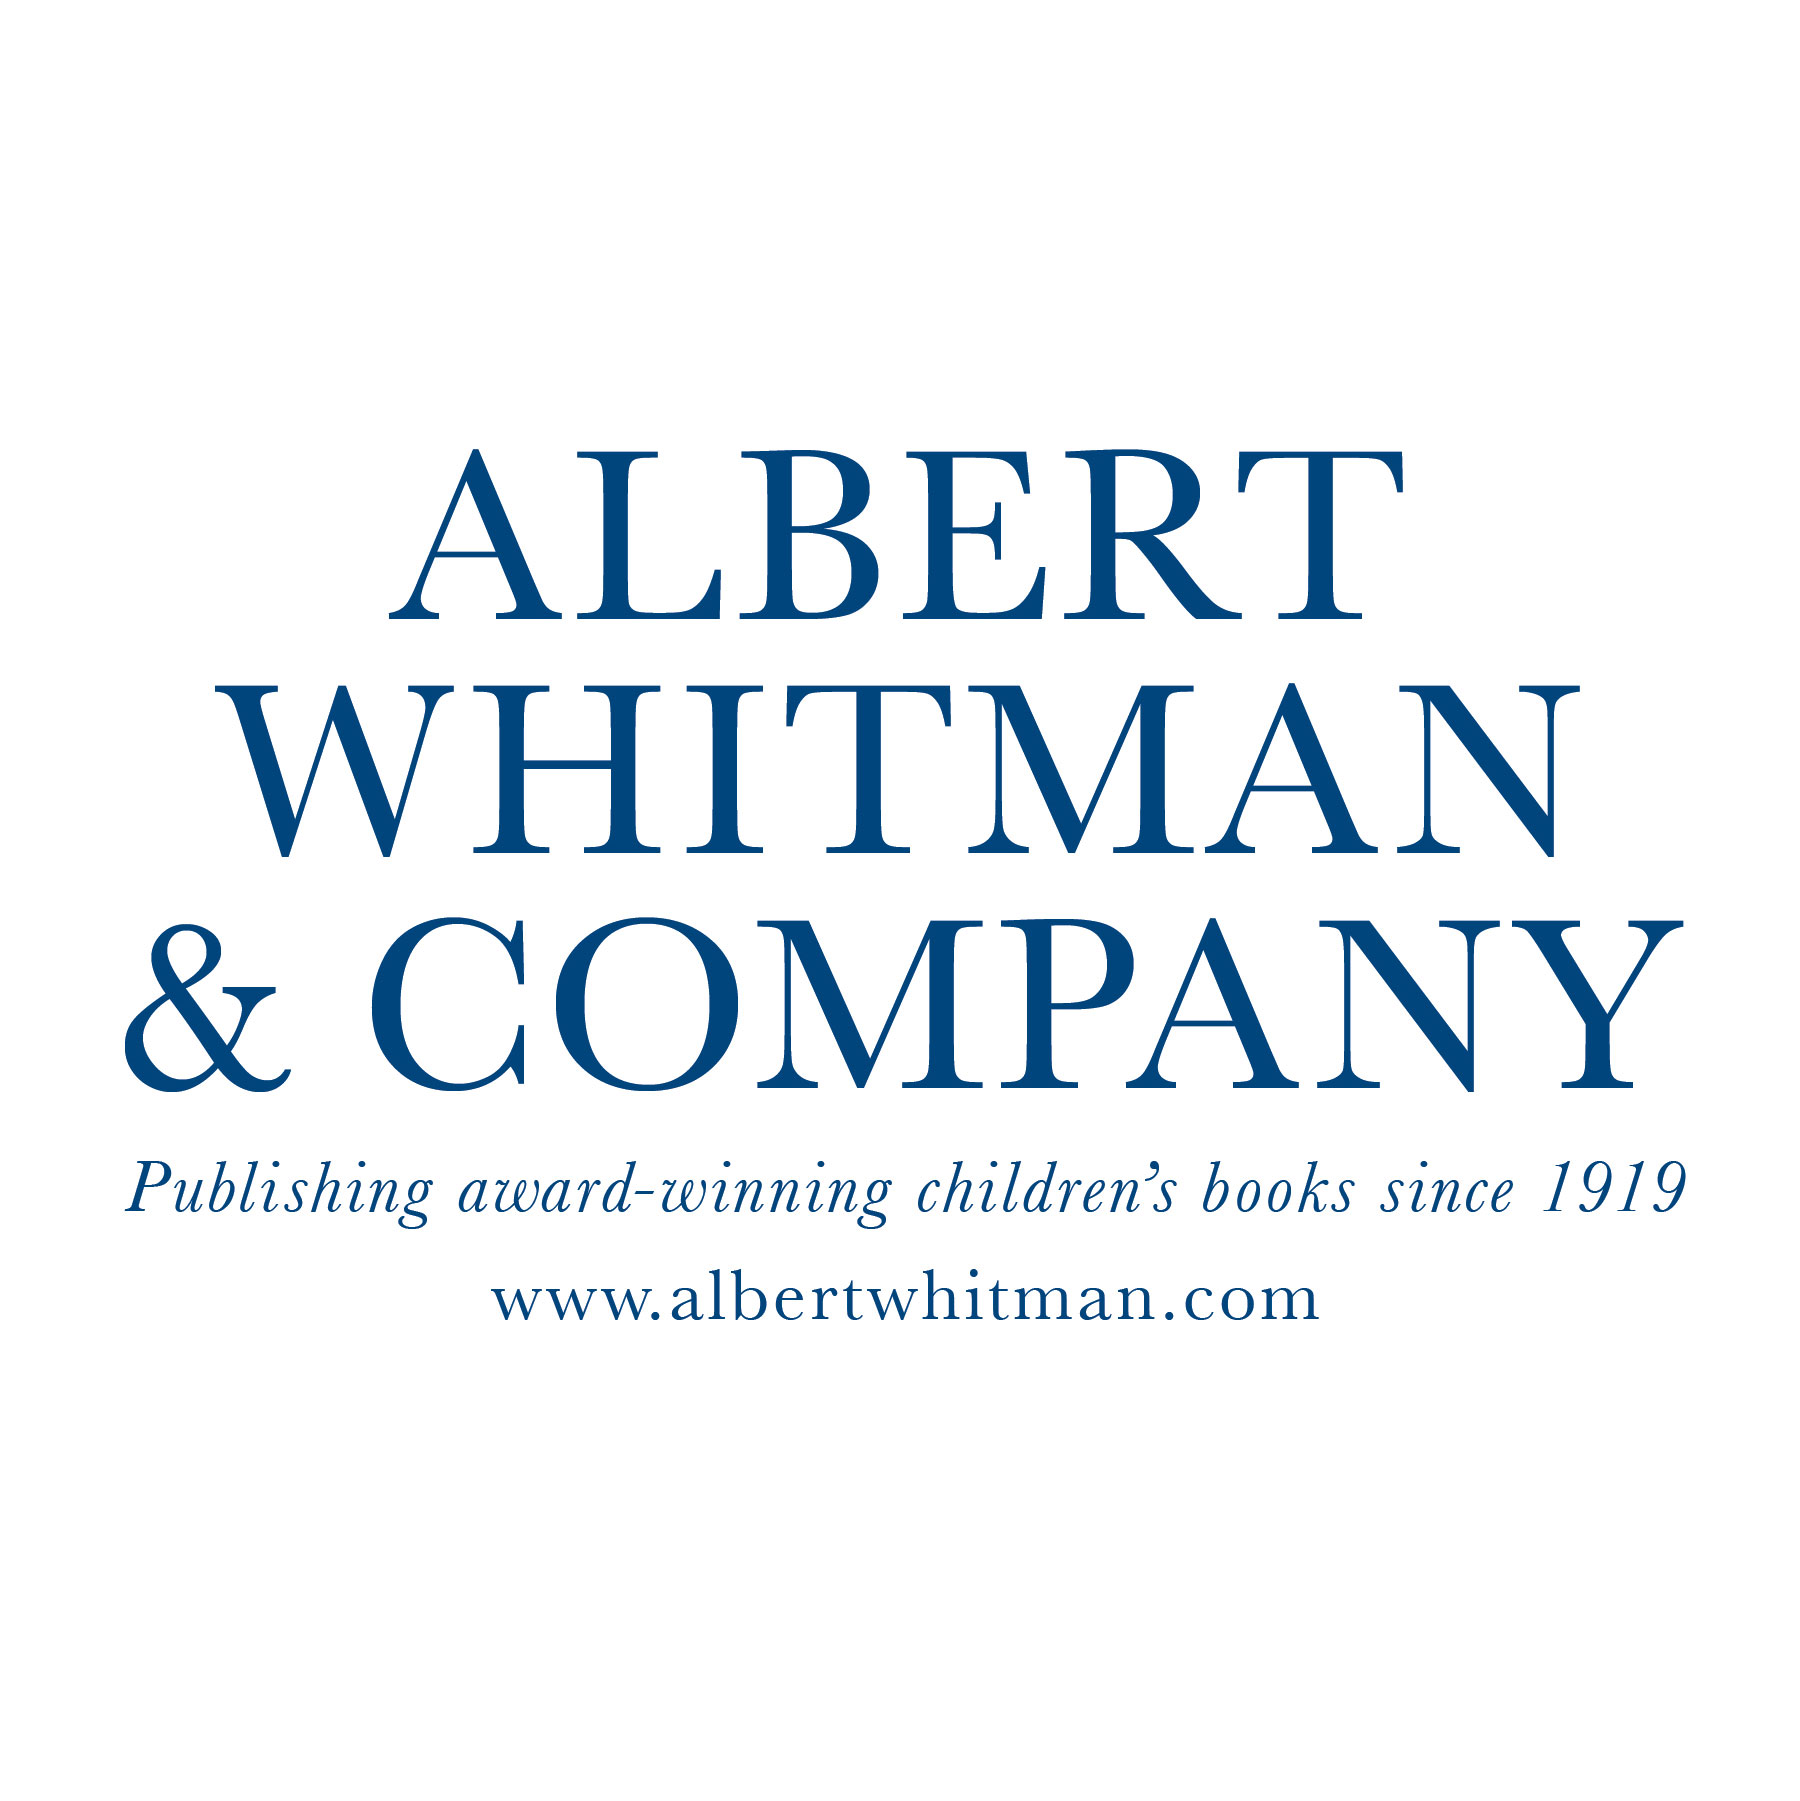 Albert Whitman & Company